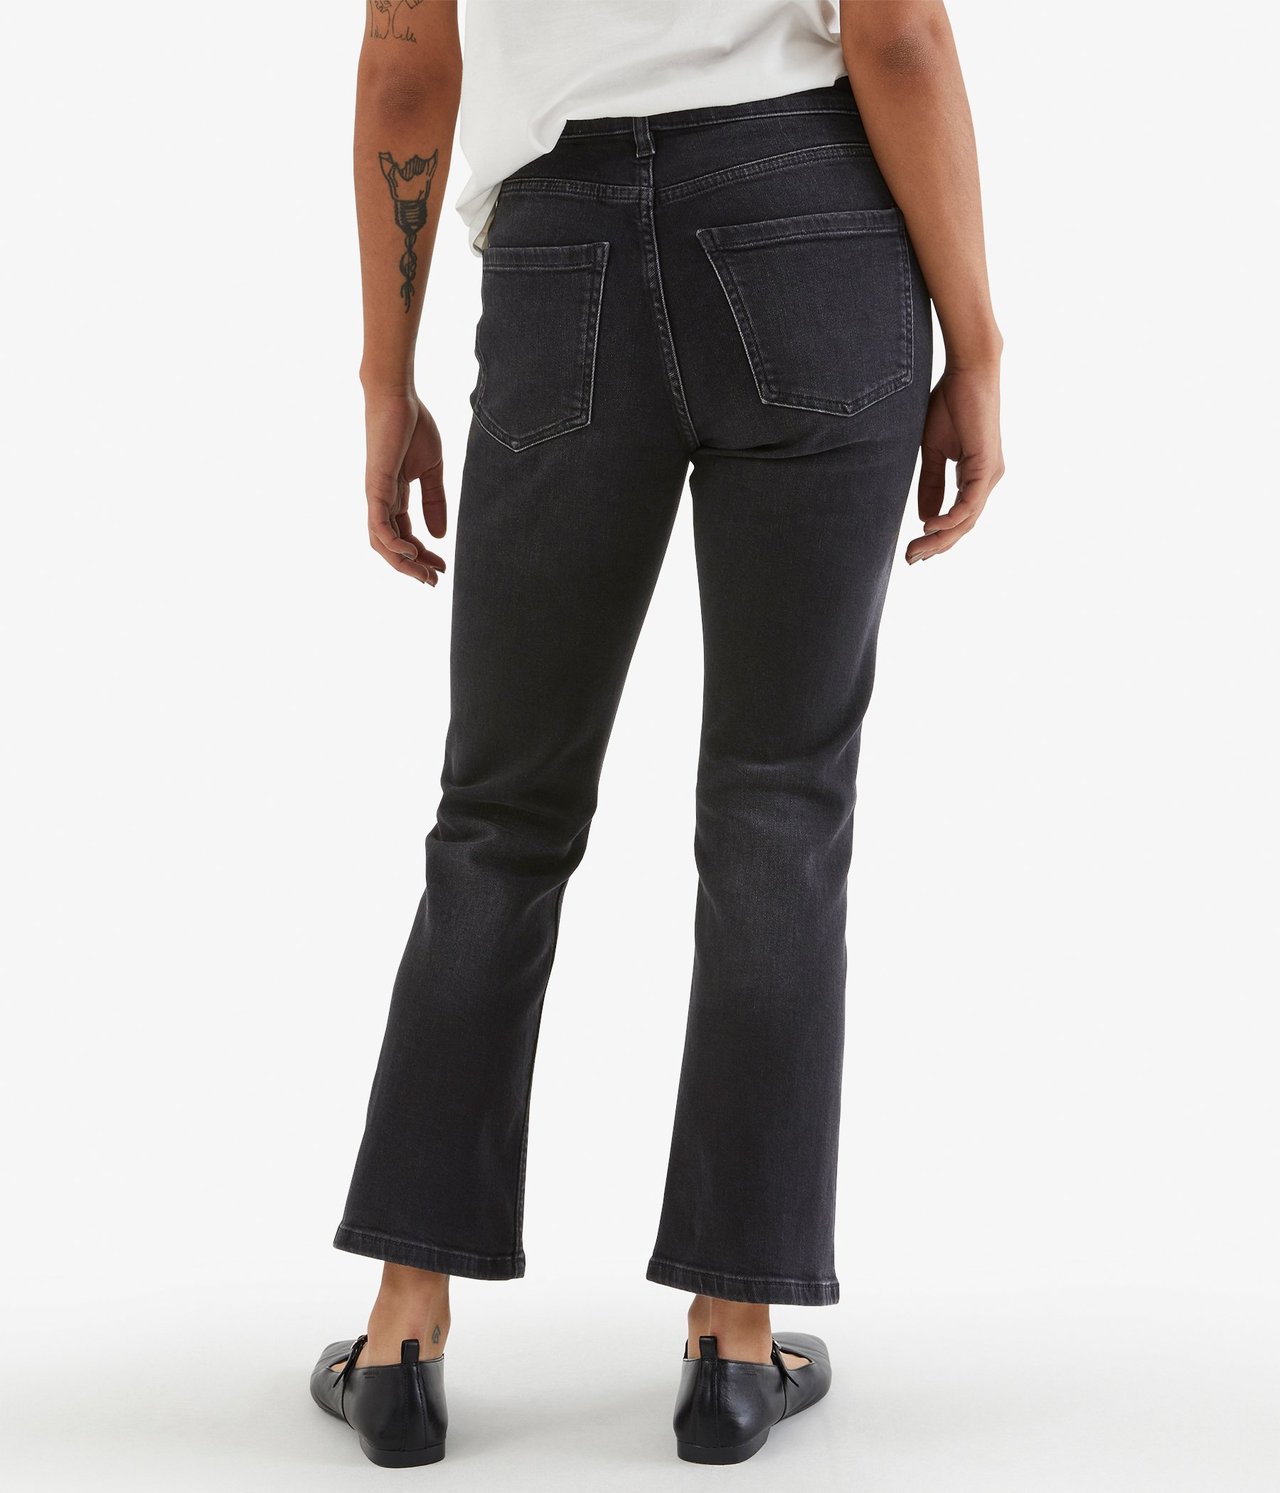 Cropped flare jeans regular waist Pesty musta denimi - null - 2